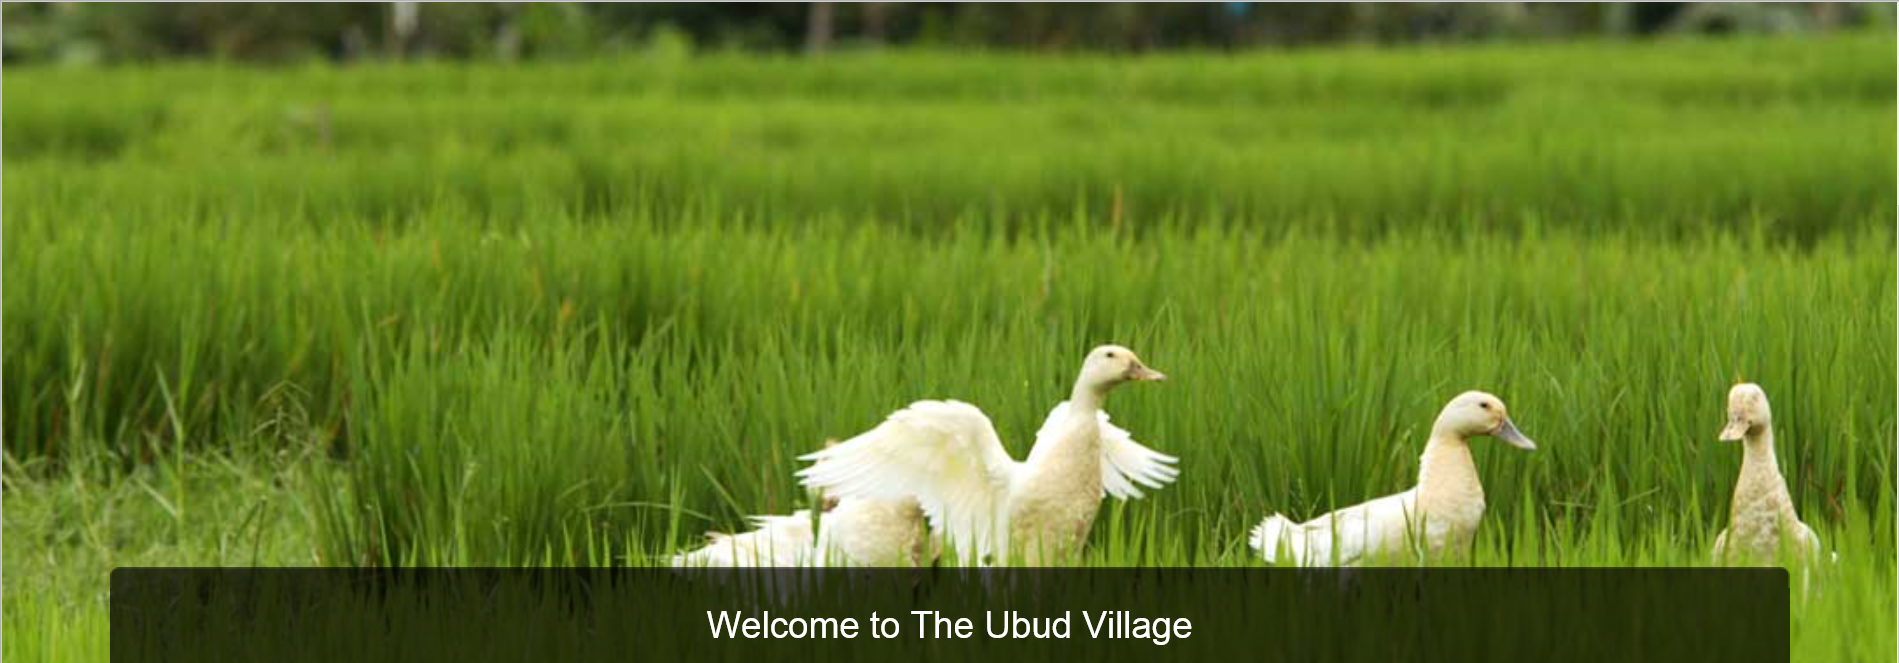 
The Ubud Village Resort & Spa